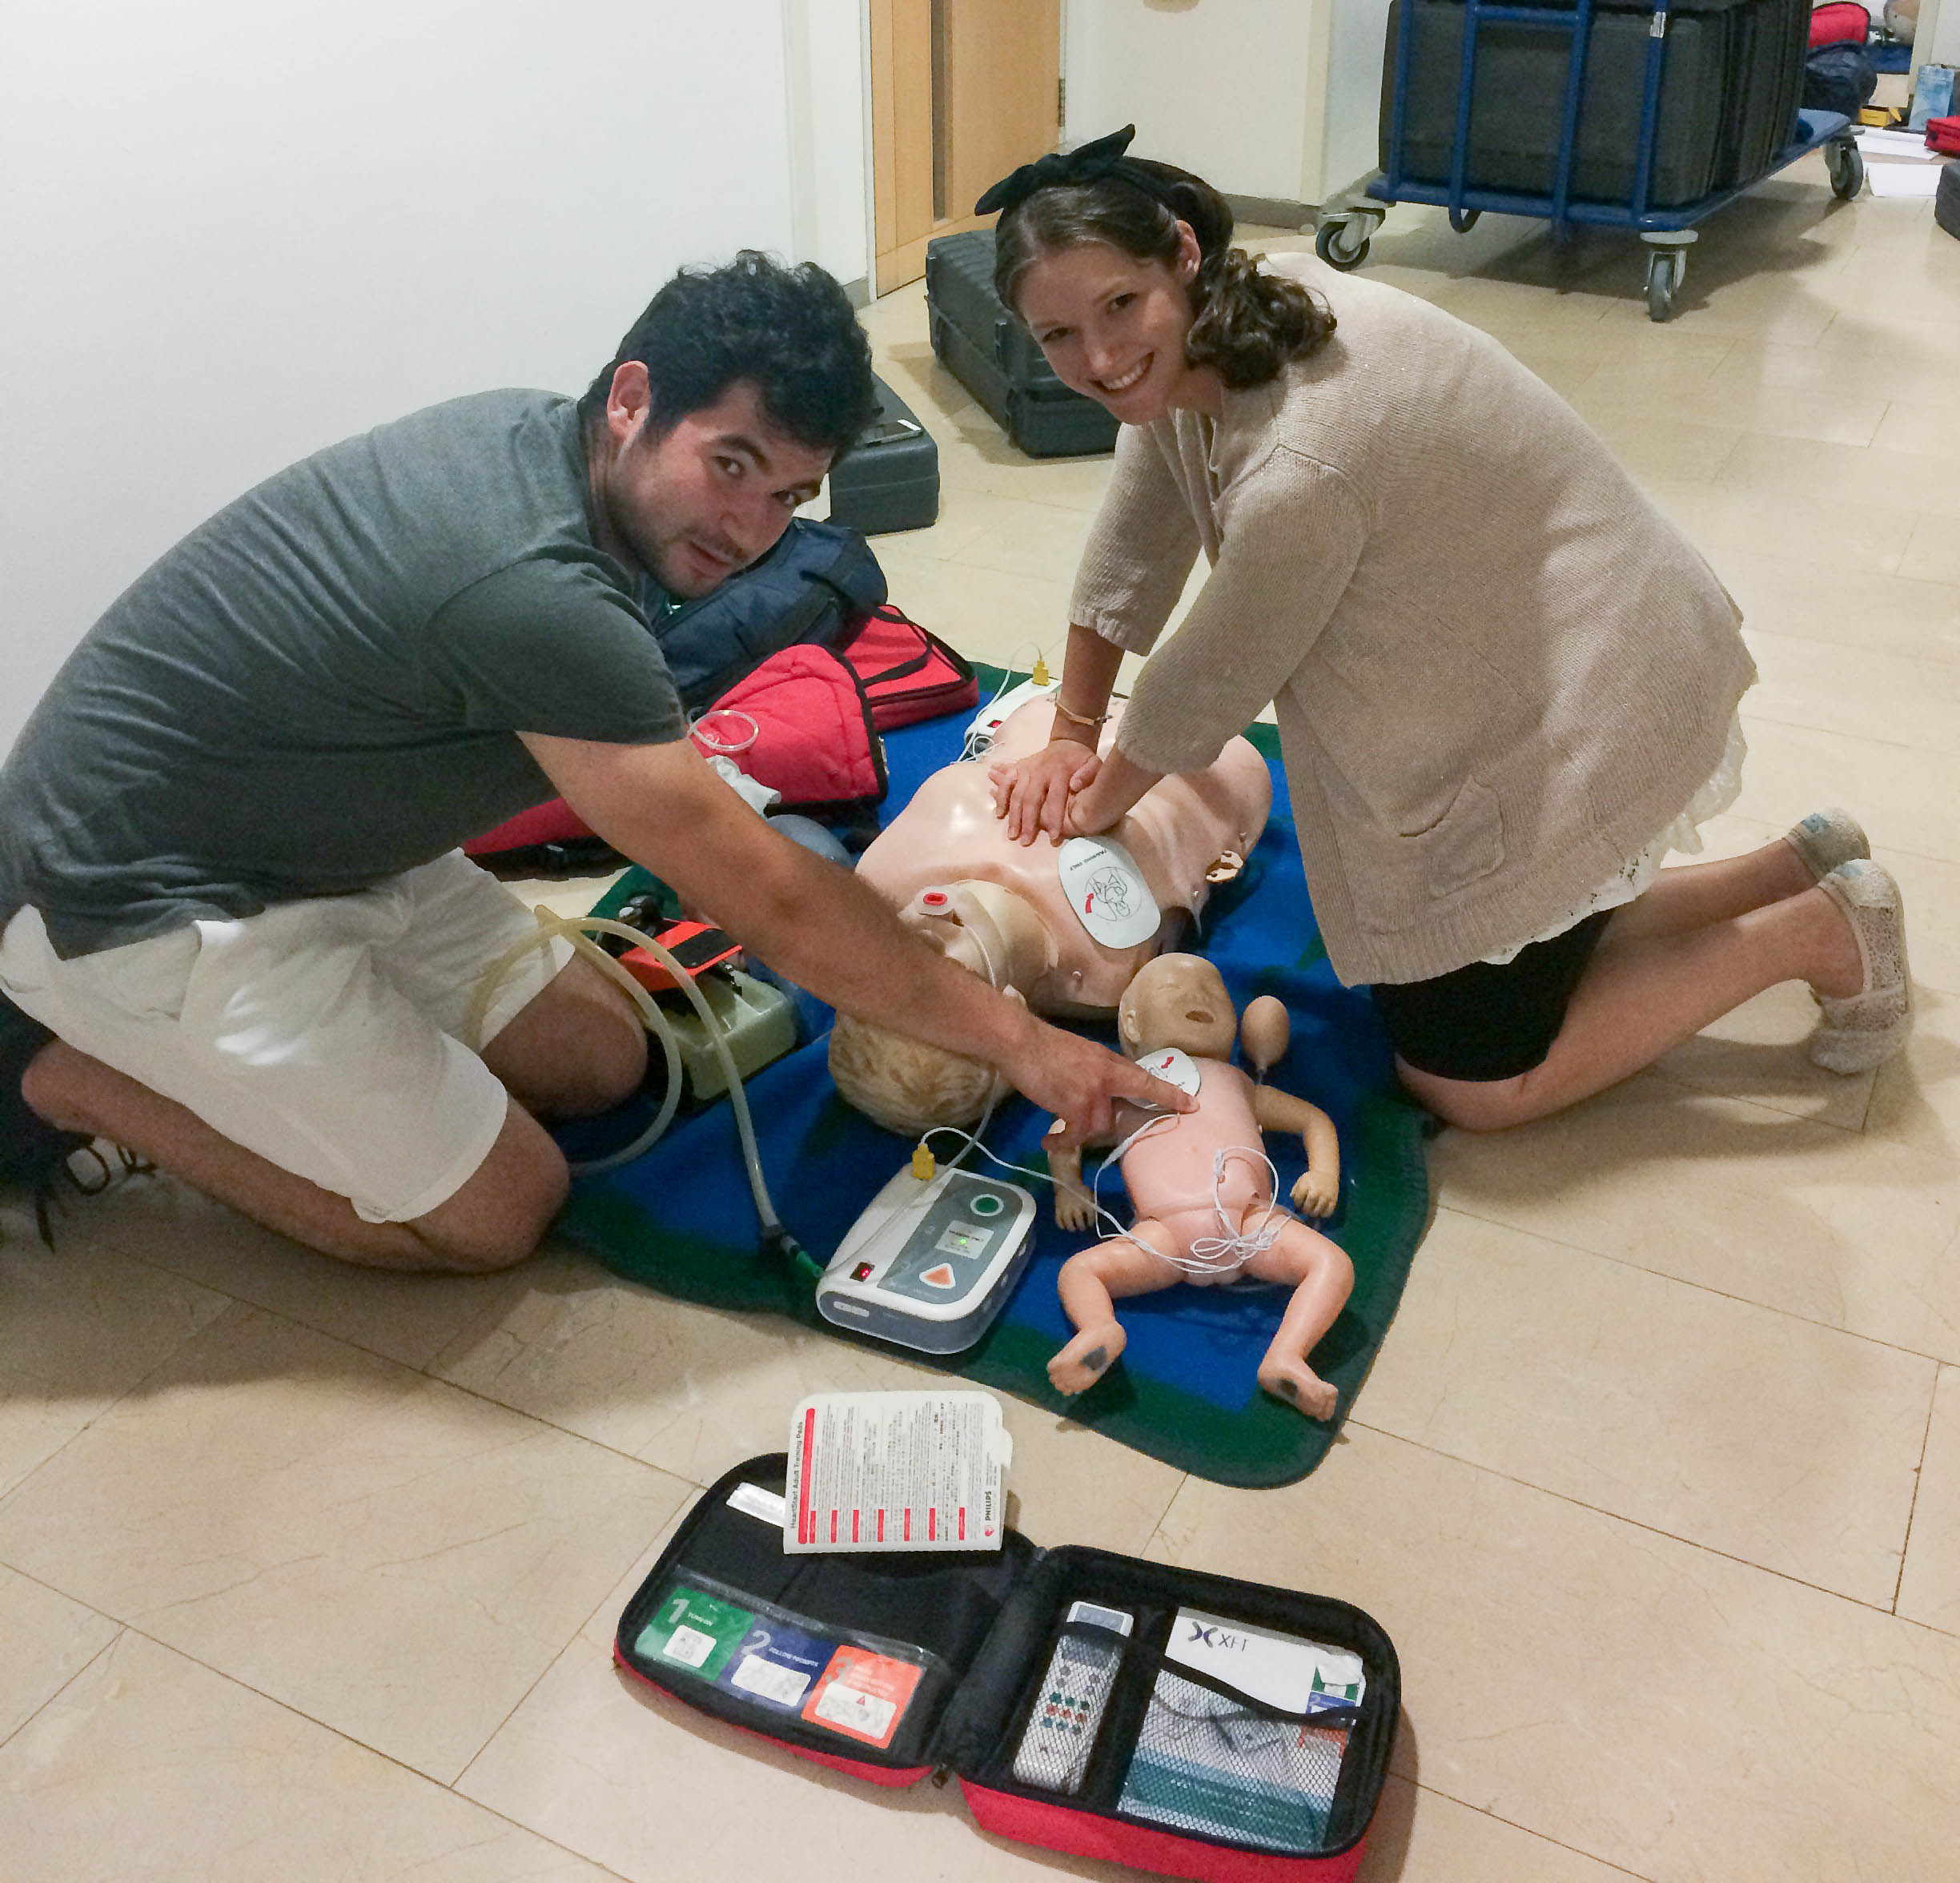 David Popok and Rachel Weintraub practicing CPR